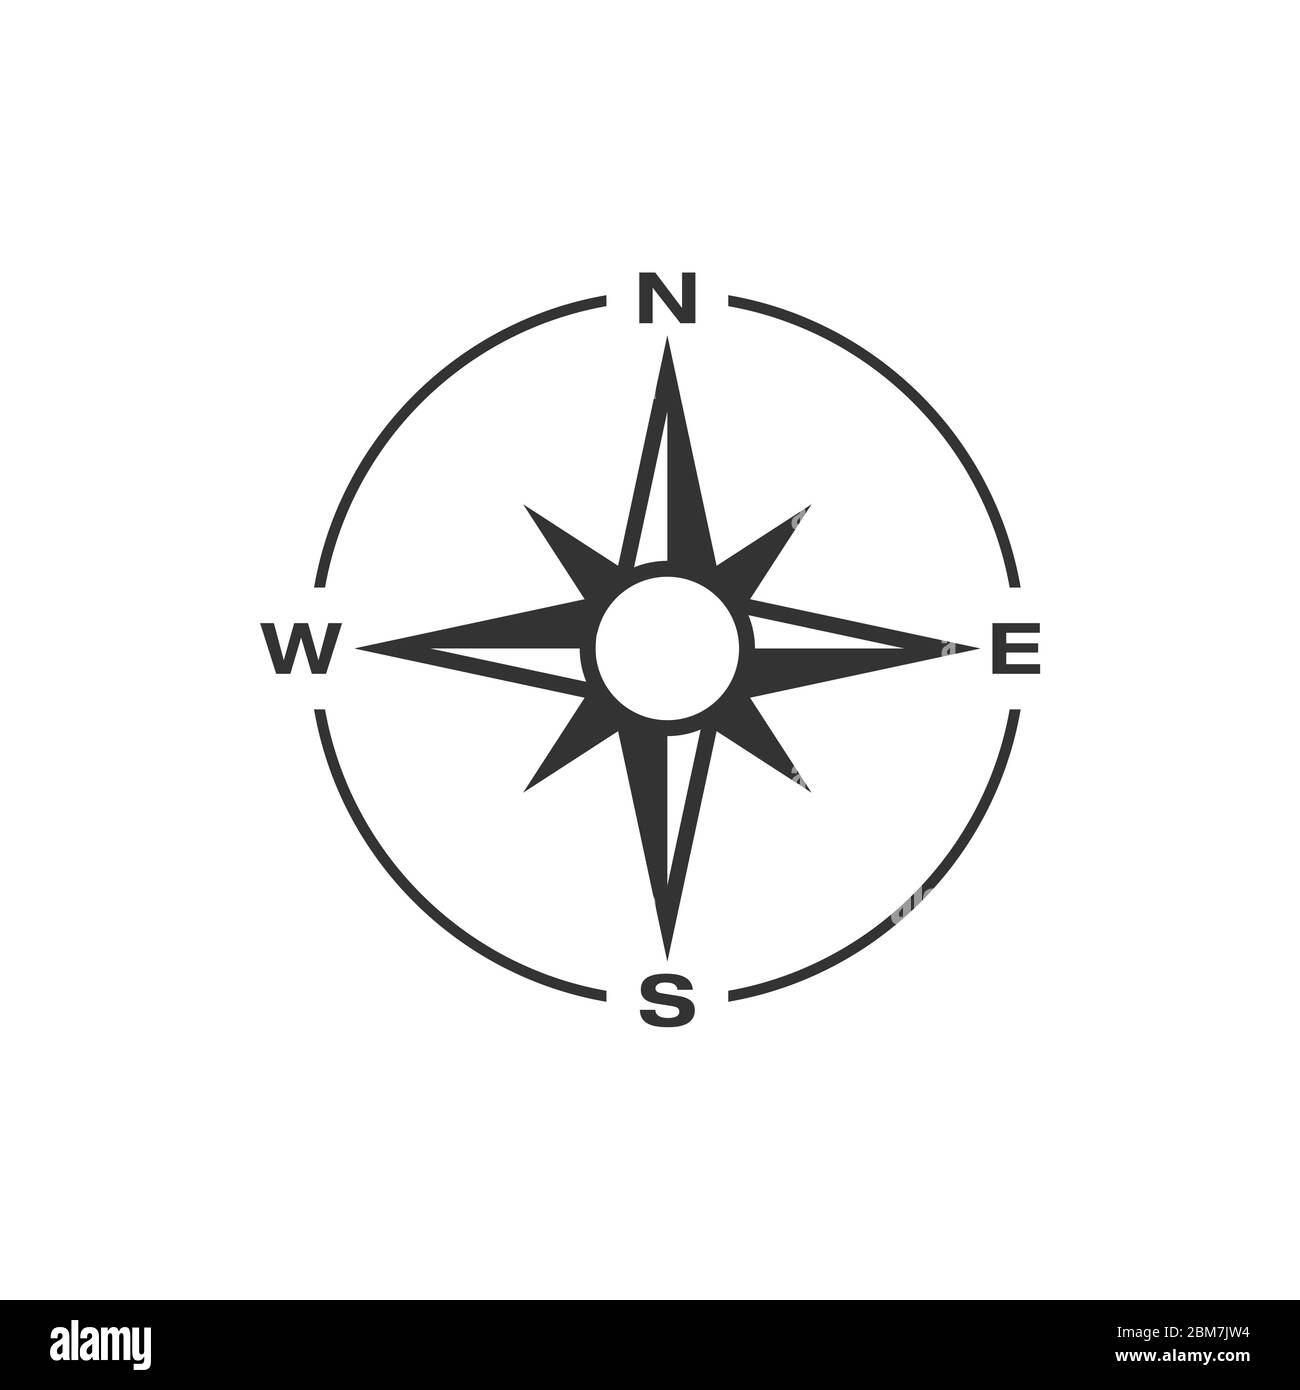 Compass Rose Icon Logo Template Illustration Design. Vector EPS 10. Stock Photo